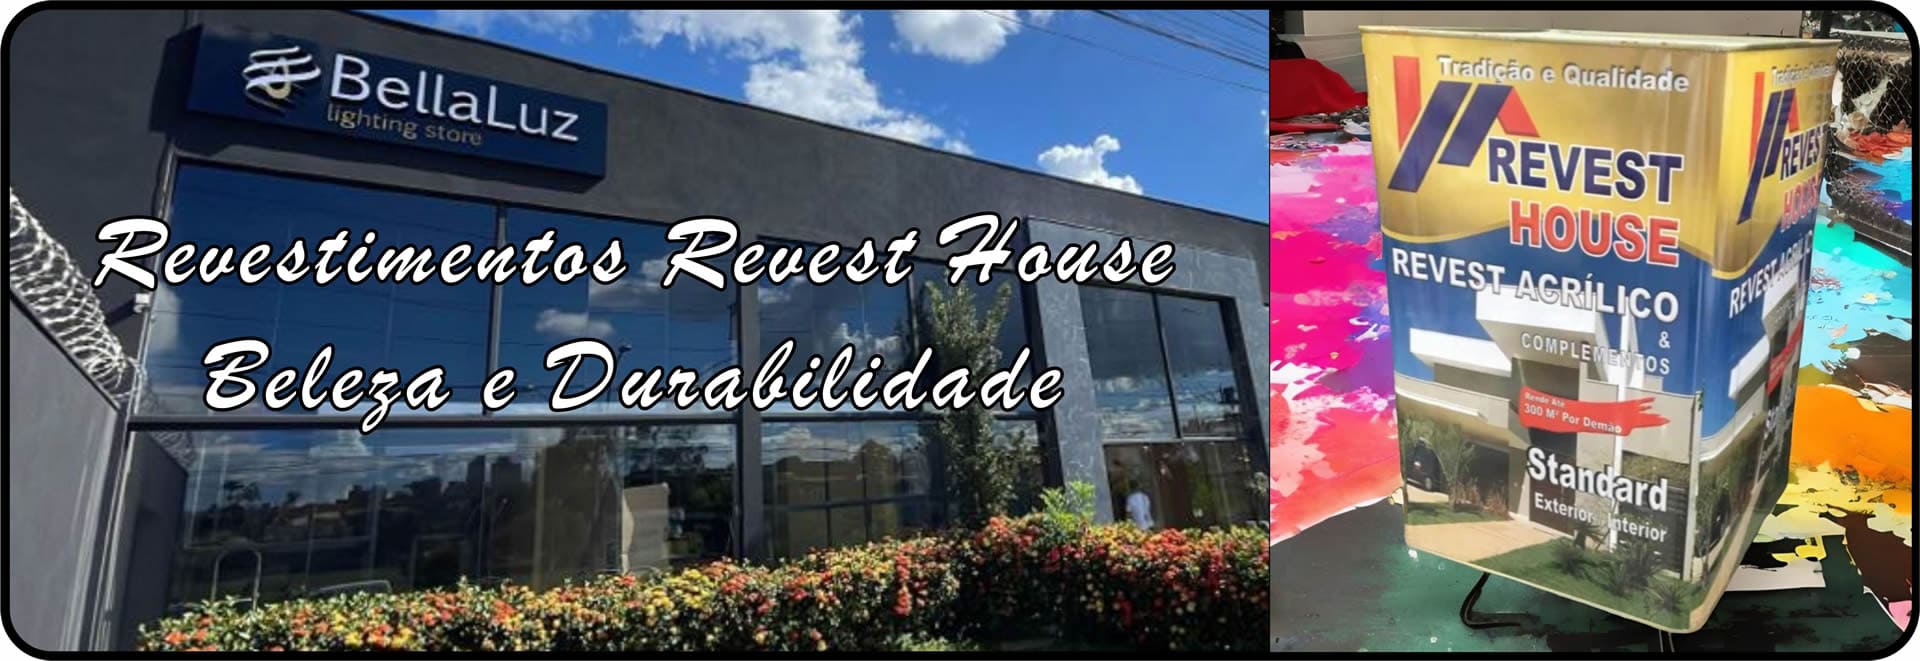 Revestimentos Revest House - Beleza e Durabilidade